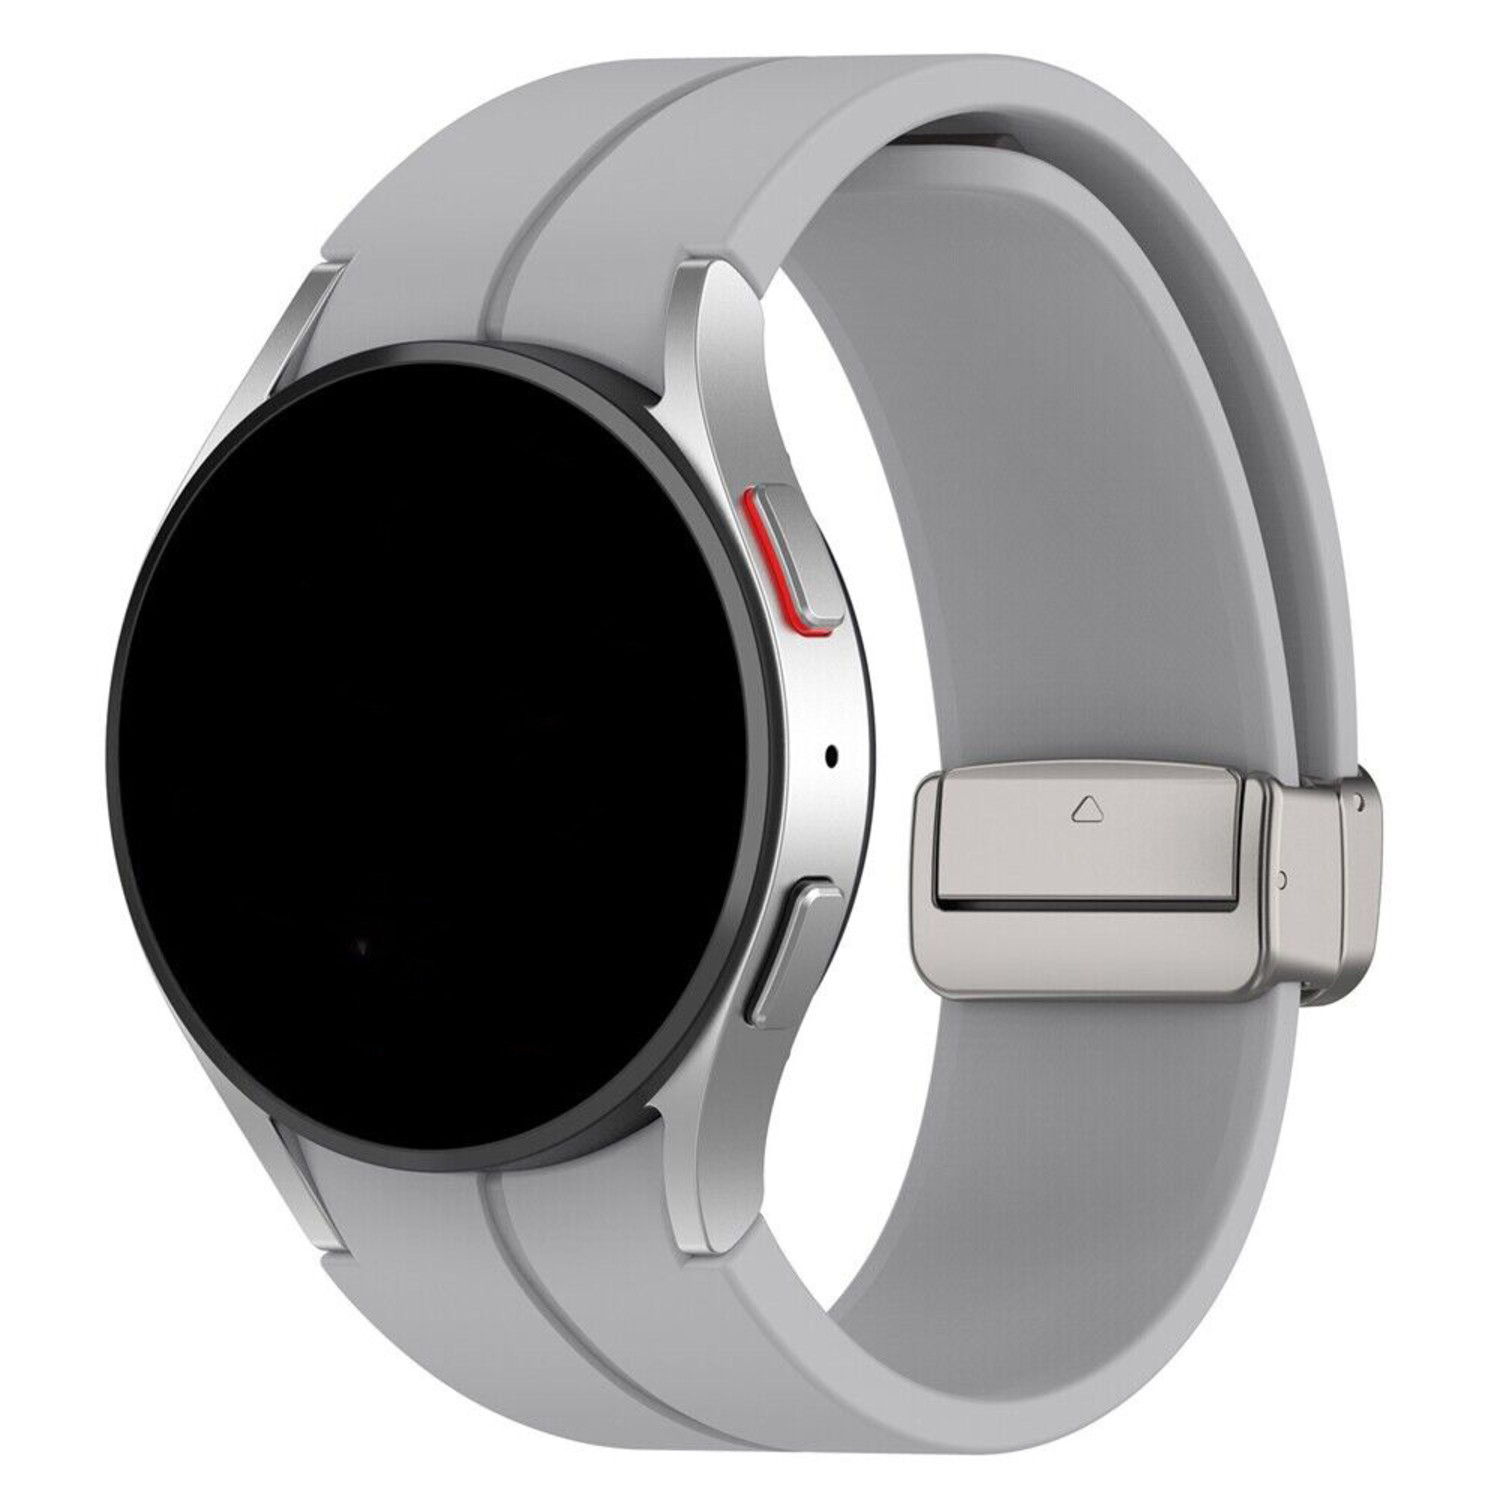 Bracelet sport magnétique Samsung Galaxy Watch 5 Pro (noir